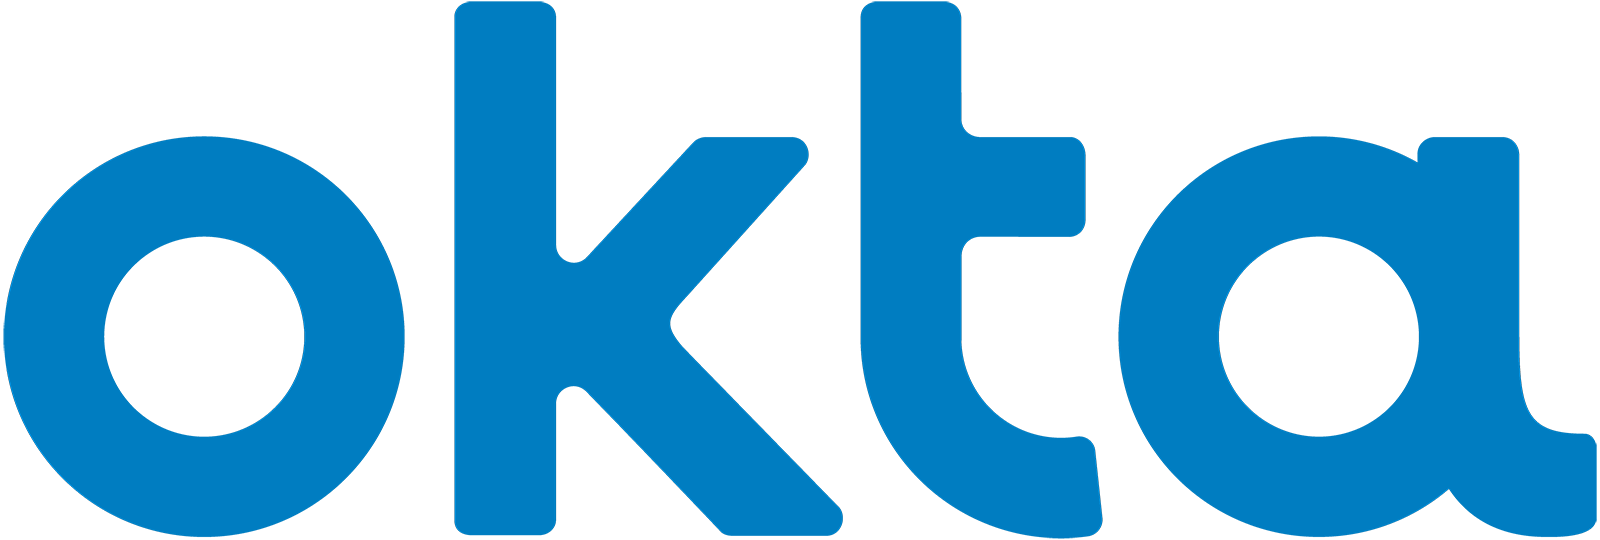 Okta_Logo_BrightBlue_Medium.png